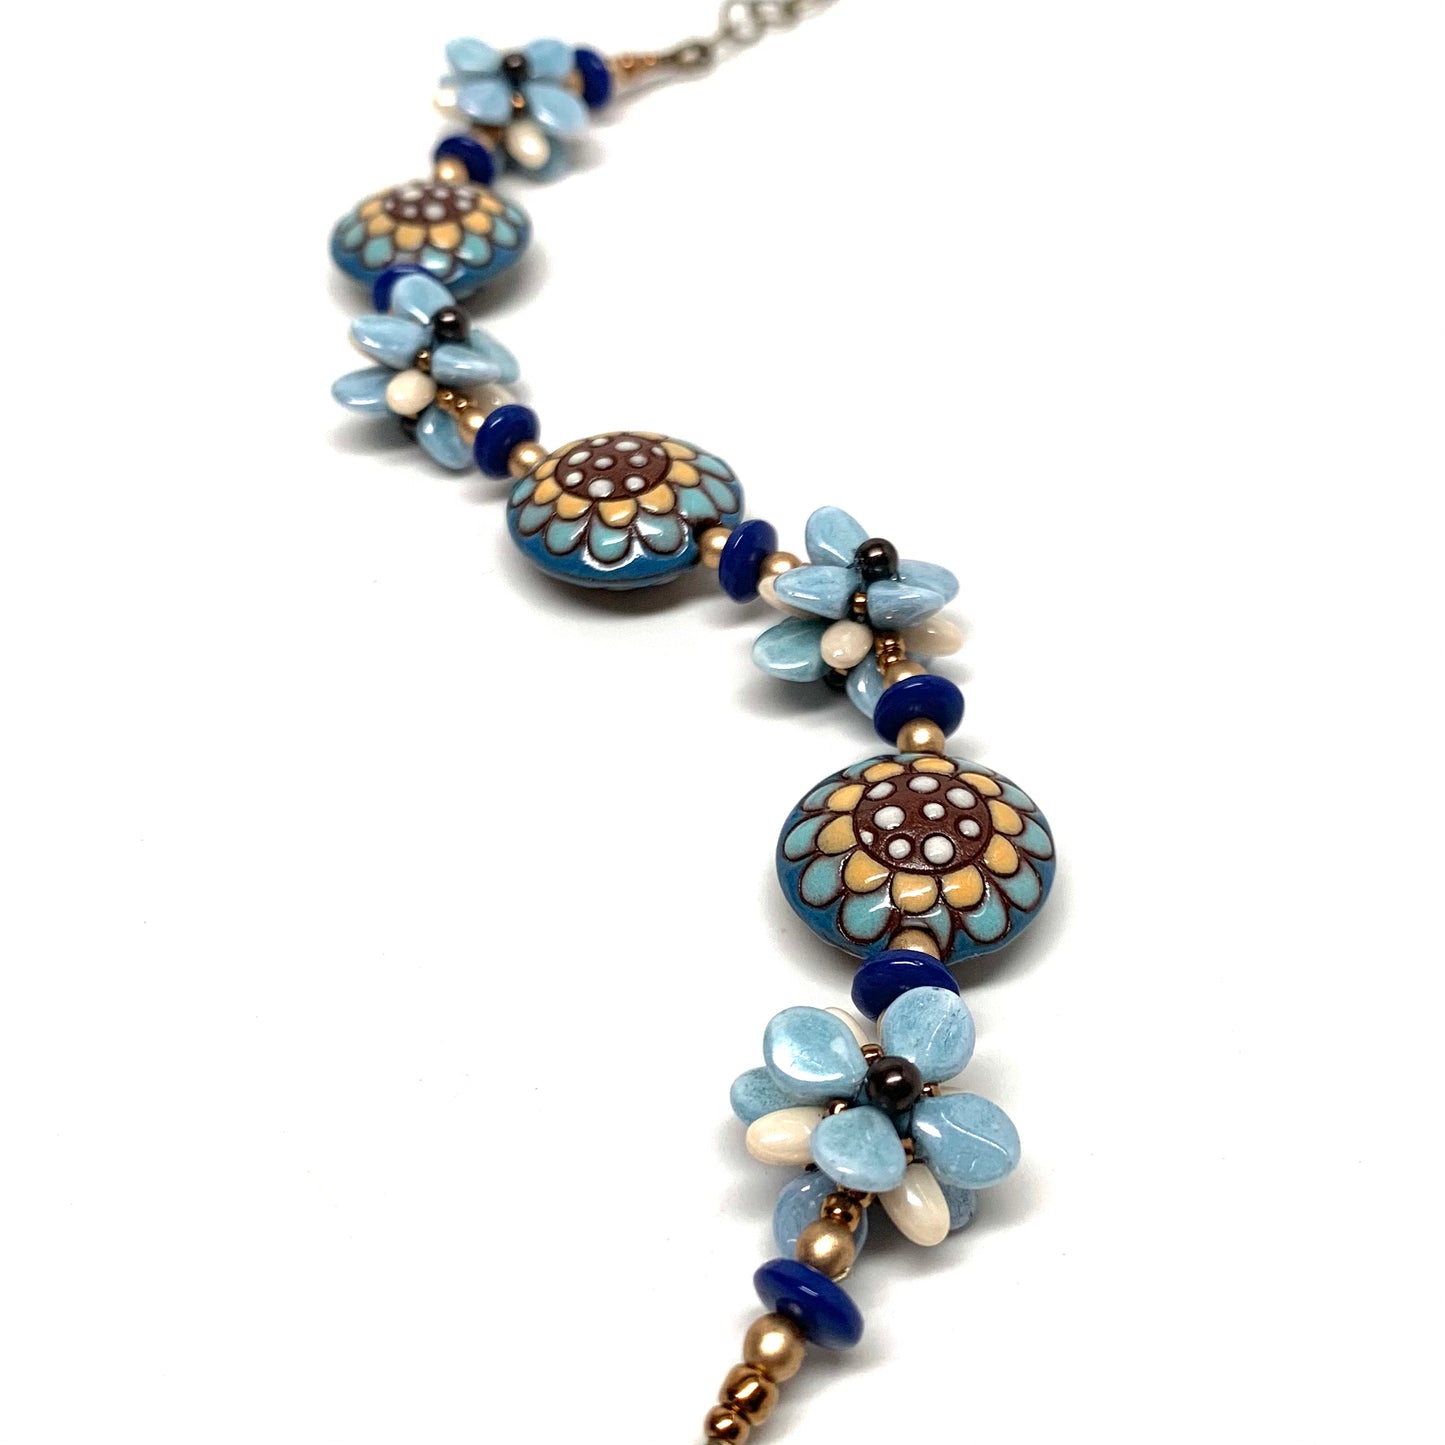 Flores Bracelet | Blue and Cream Flores Beads with Golem beads